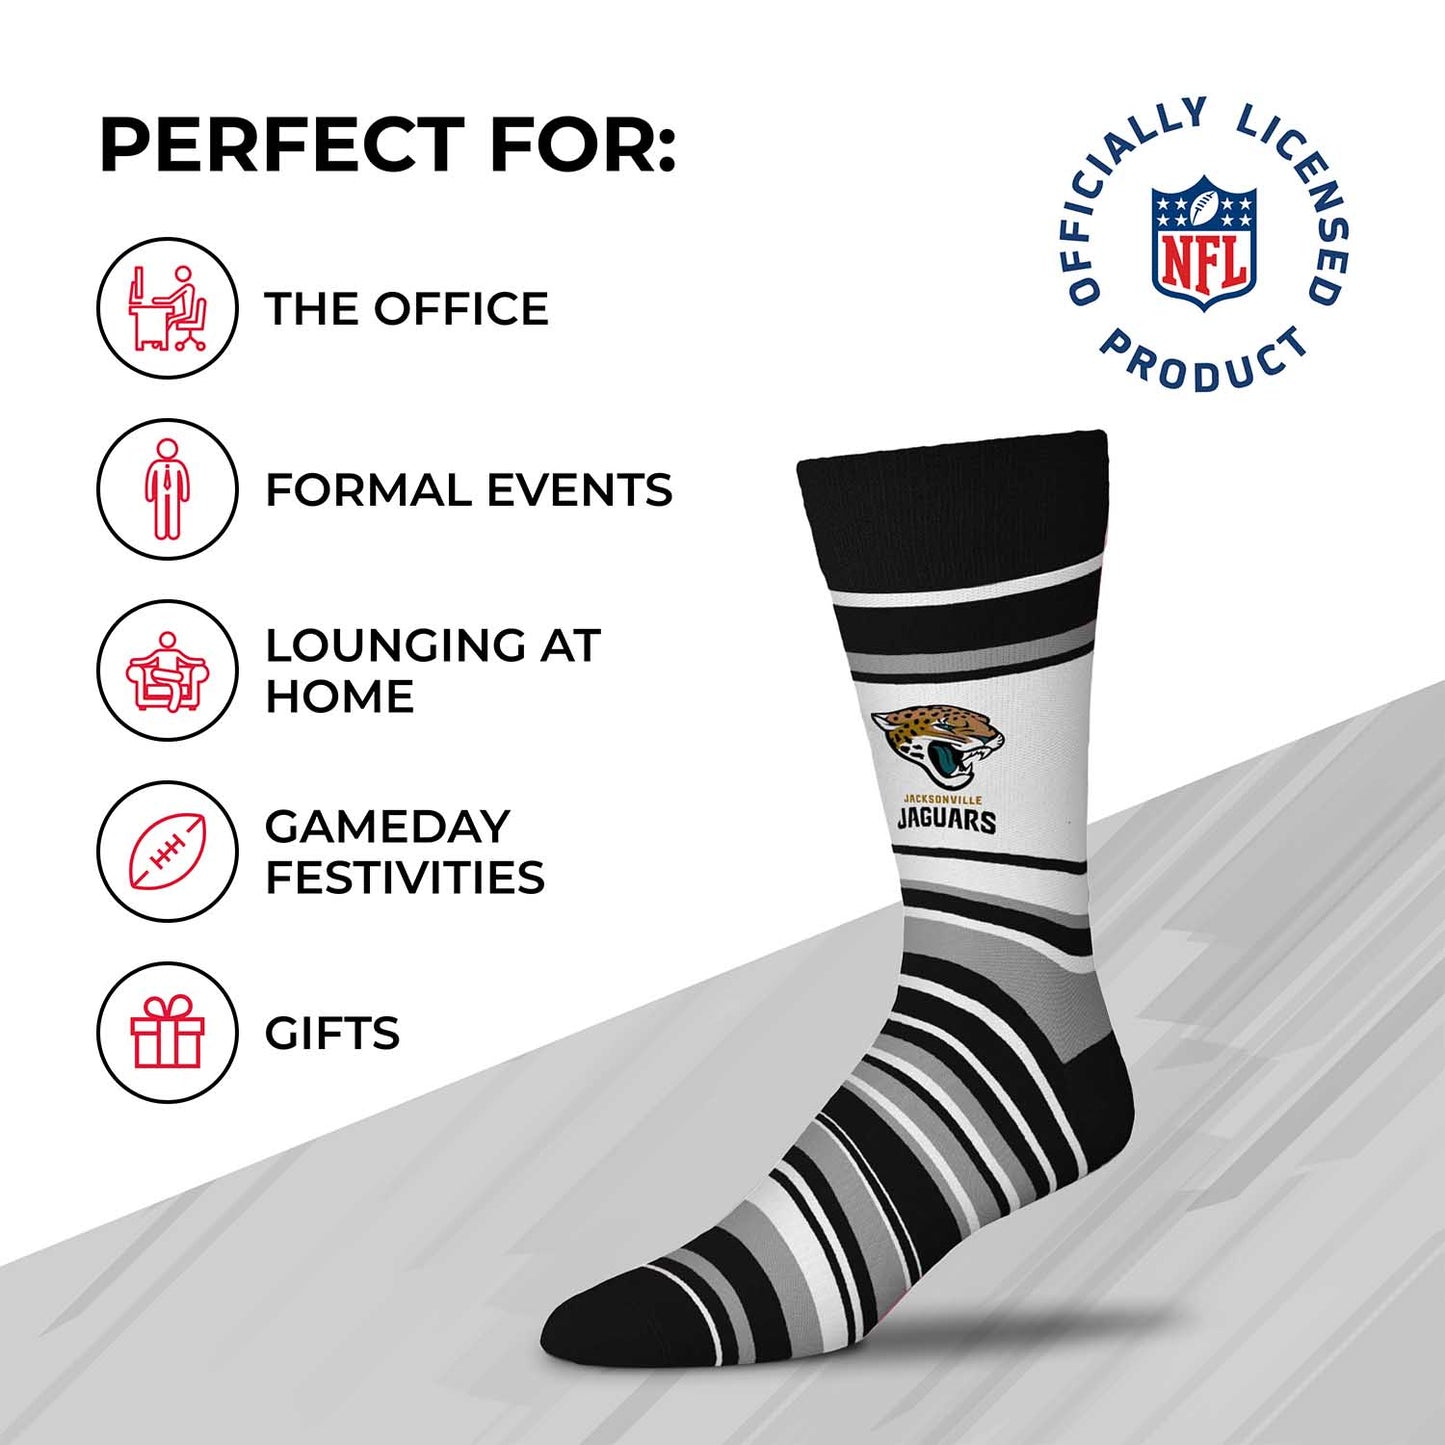 Jacksonville Jaguars NFL Adult Striped Dress Socks - Black